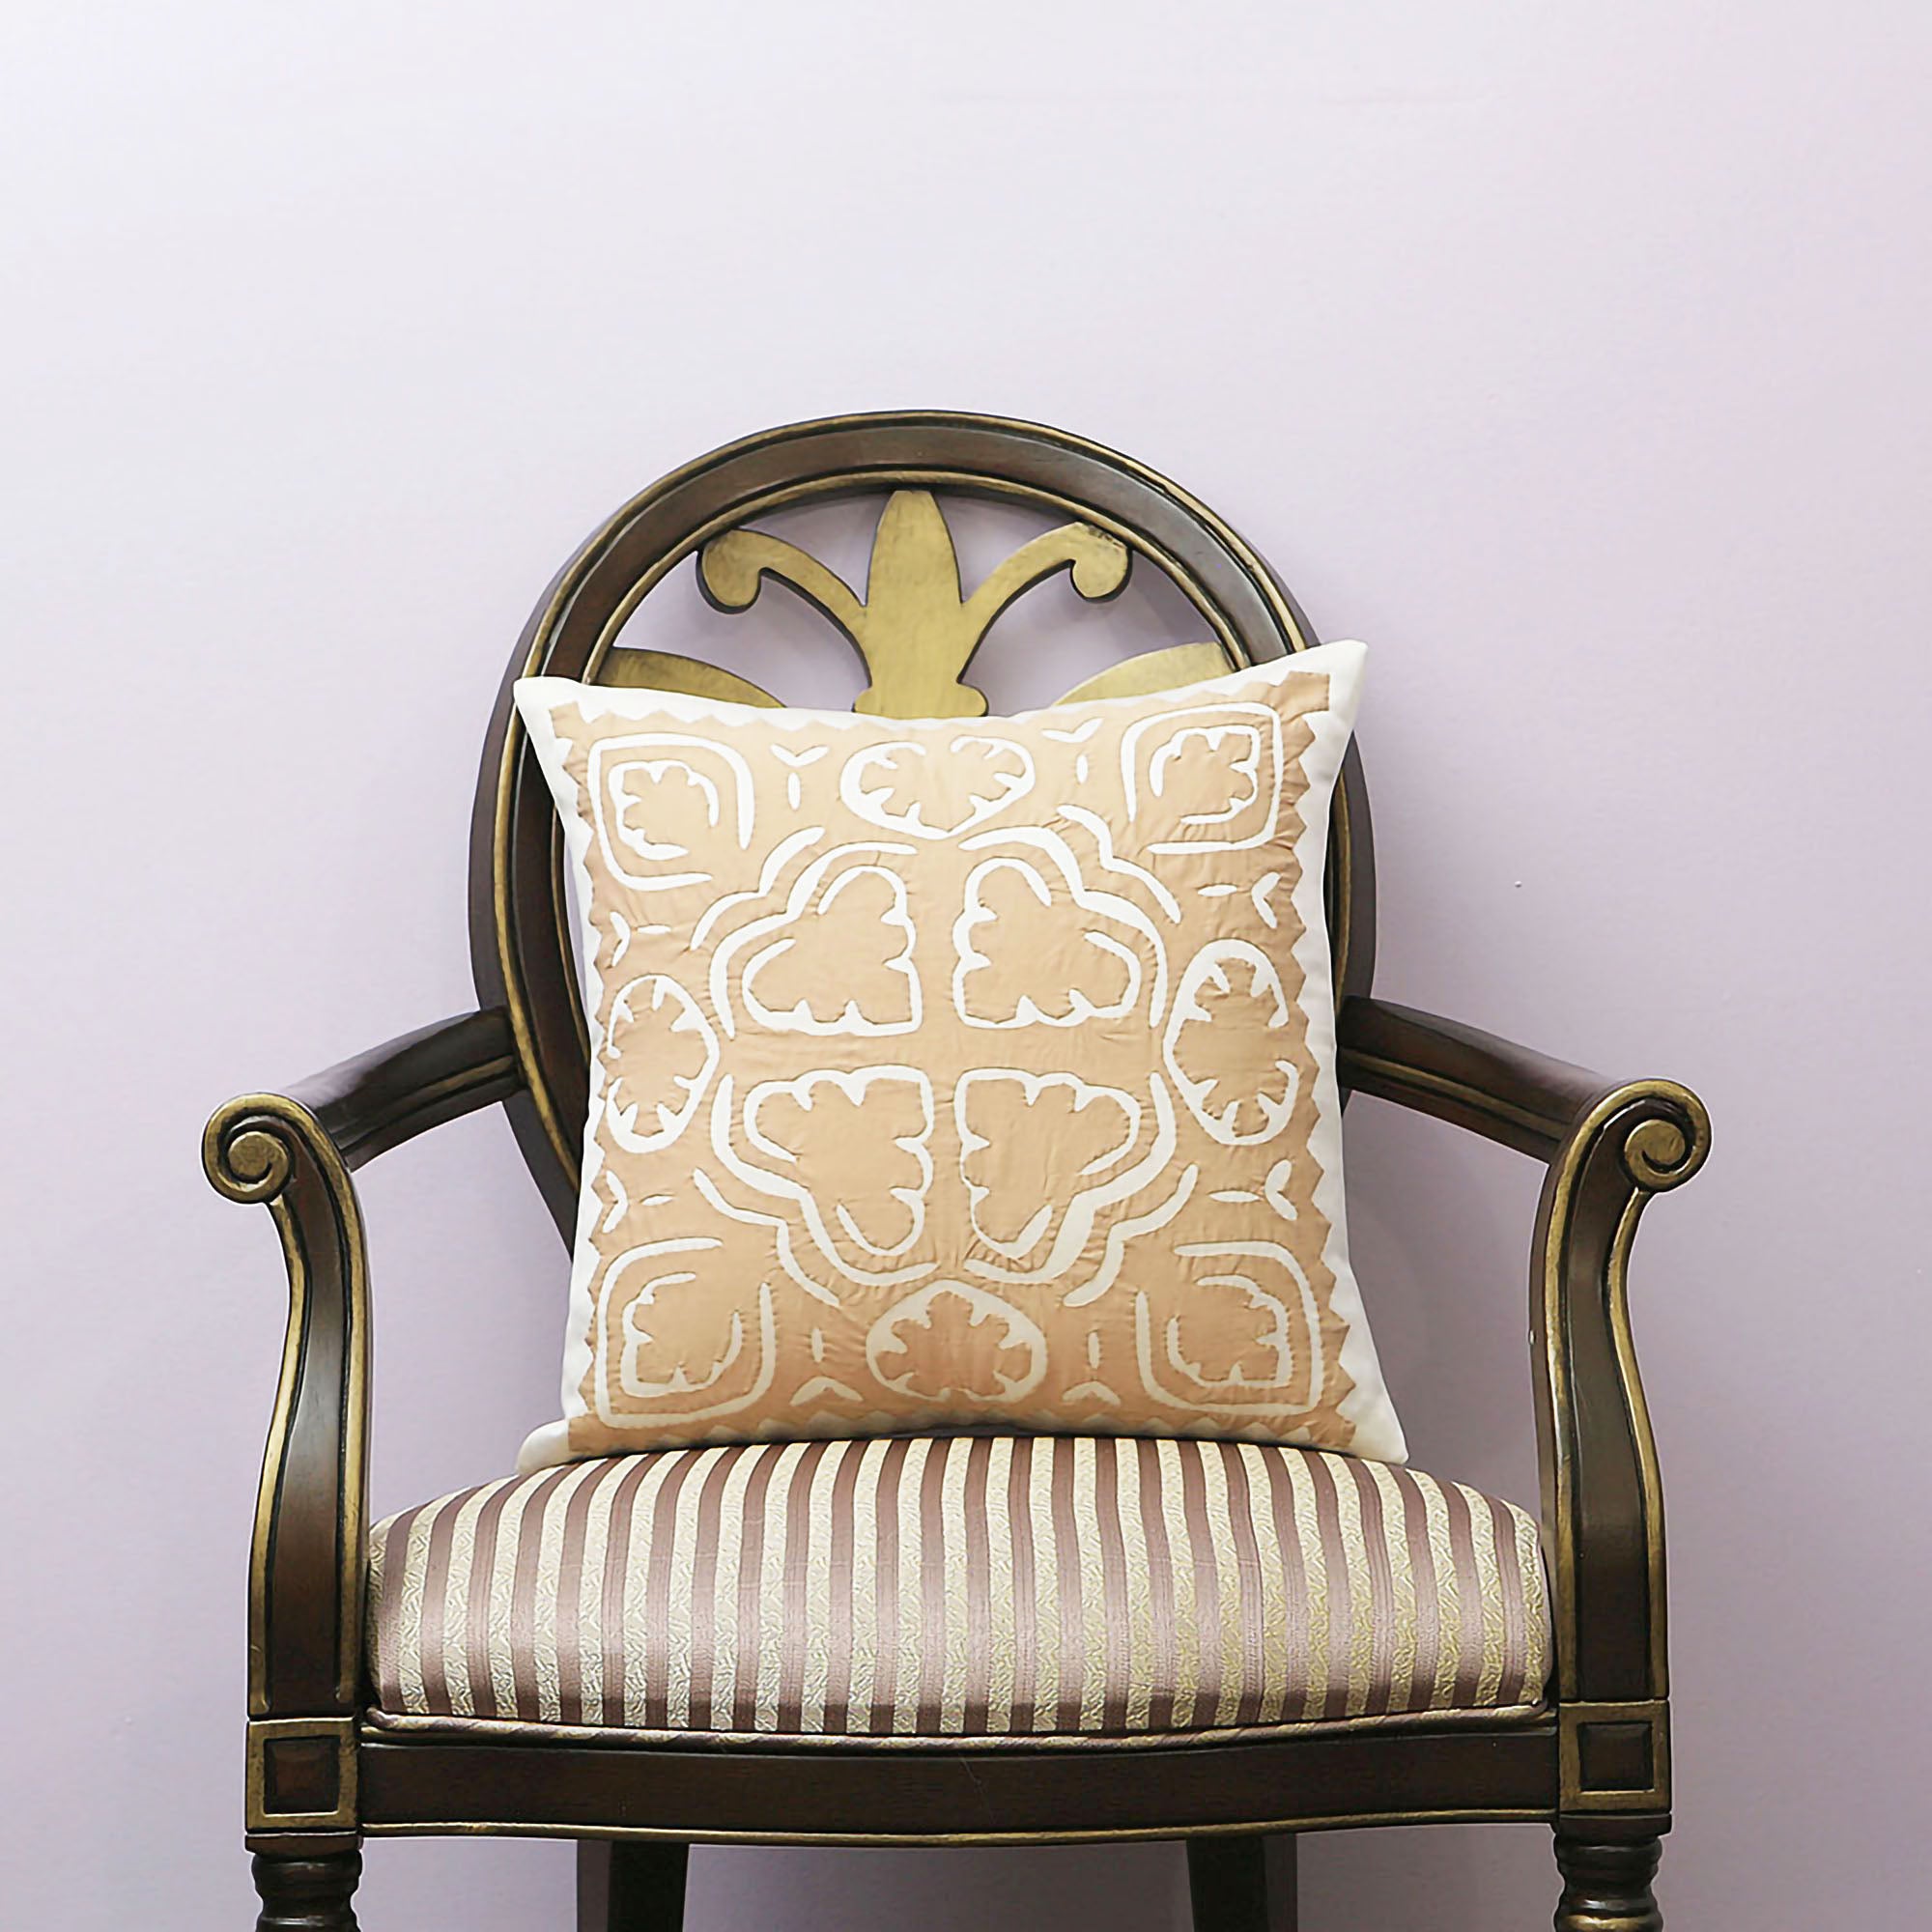 Handmade Rilli Applique Satin  Decorative Throw Pillow & Cushion Cover 18 x 18 inches Cream Rilli